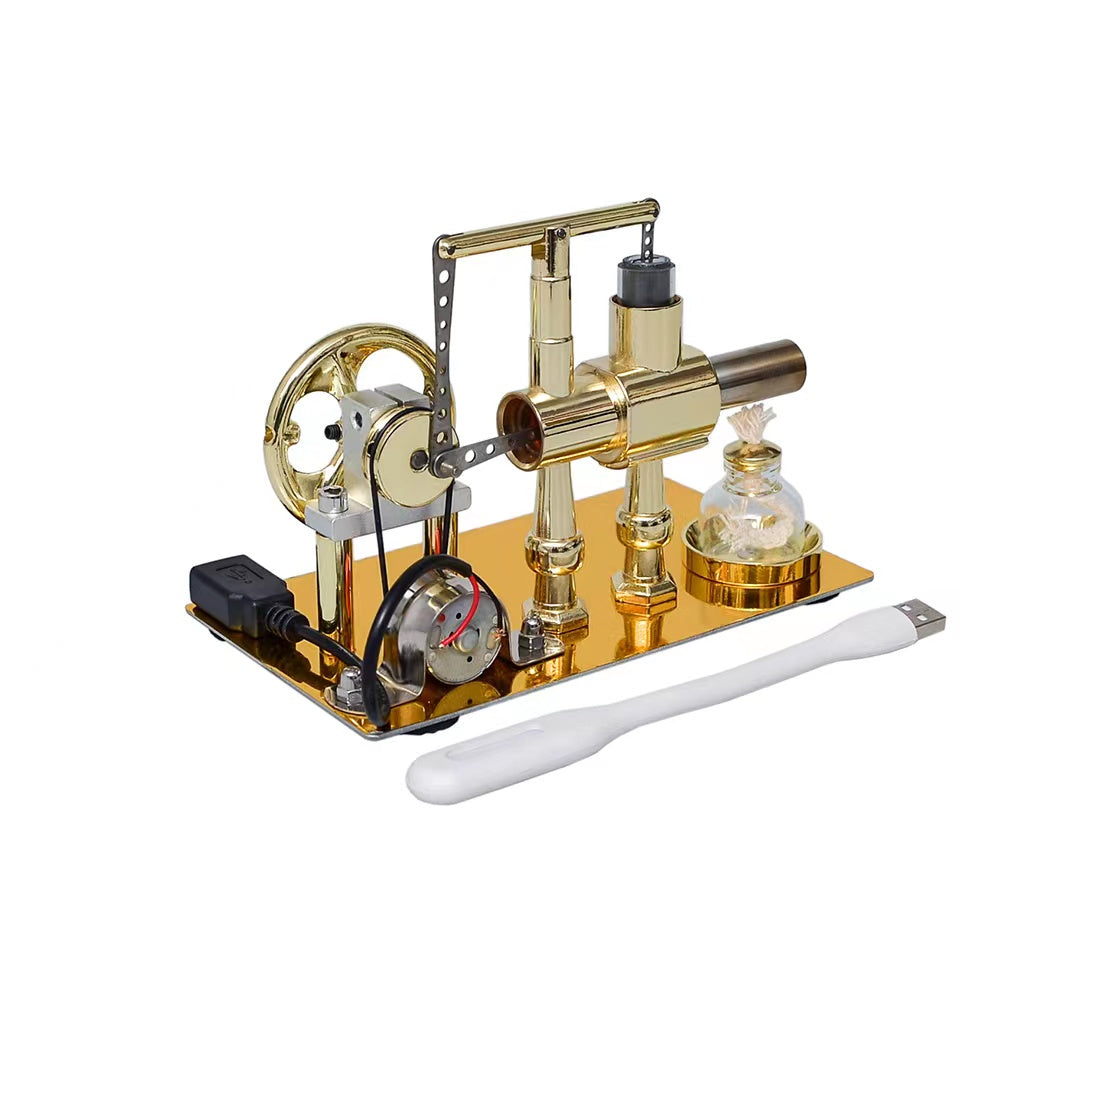 ENJOMOR Balance Single-cylinder Hot Air Stirling Engine External Combustion Engine Generator Model with USB Light Science & Technology Educational Toys